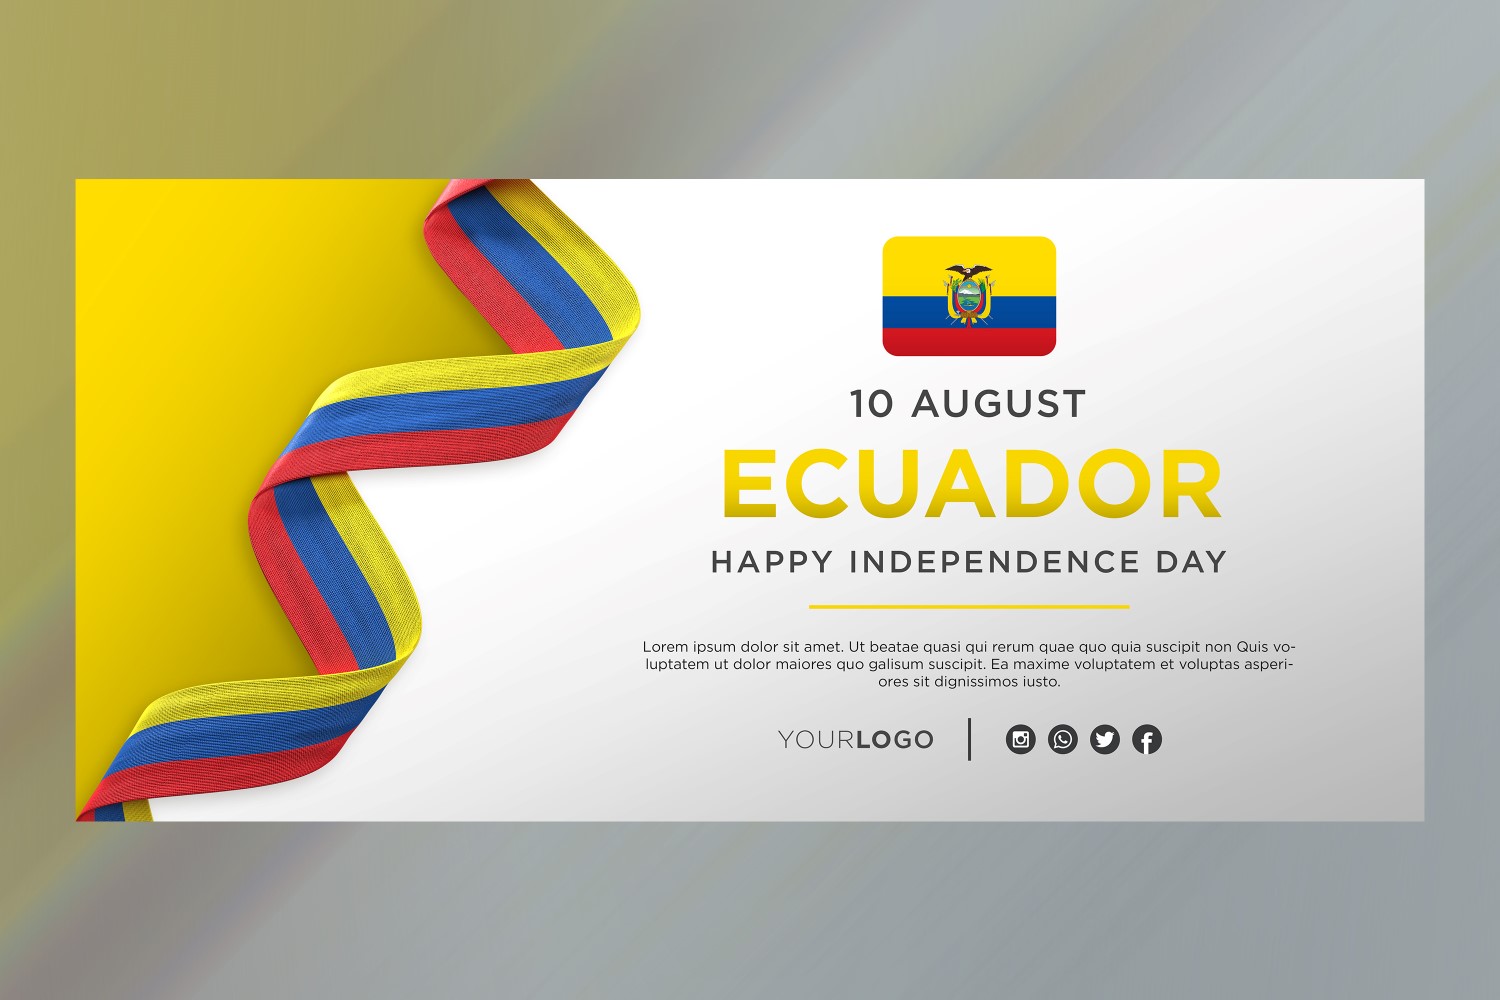 Ecuador National Independence Day Celebration Banner, National Anniversary